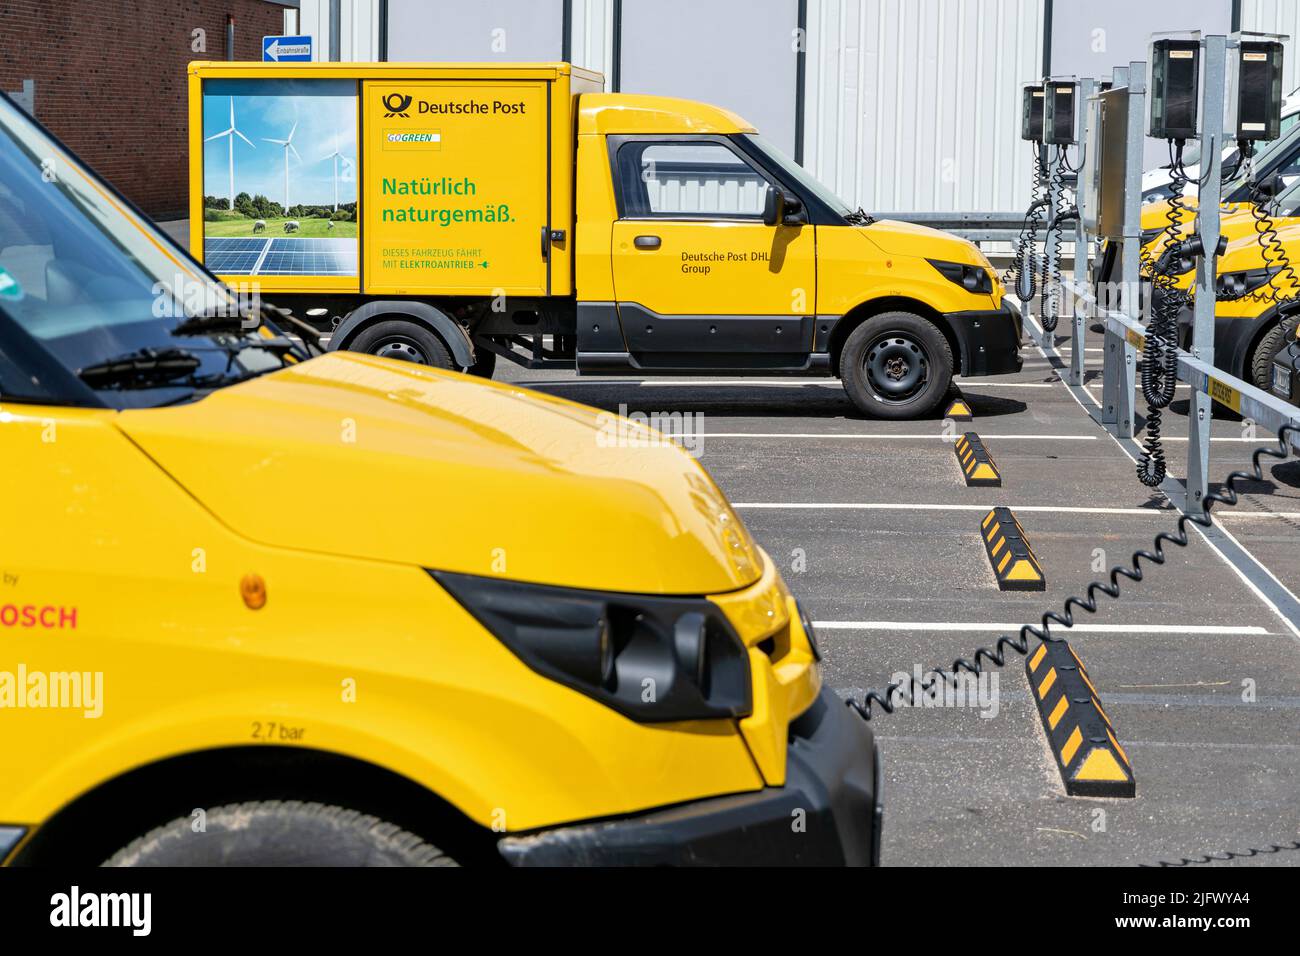 StreetScooter Work of Deutsche Post DHL Stock Photo